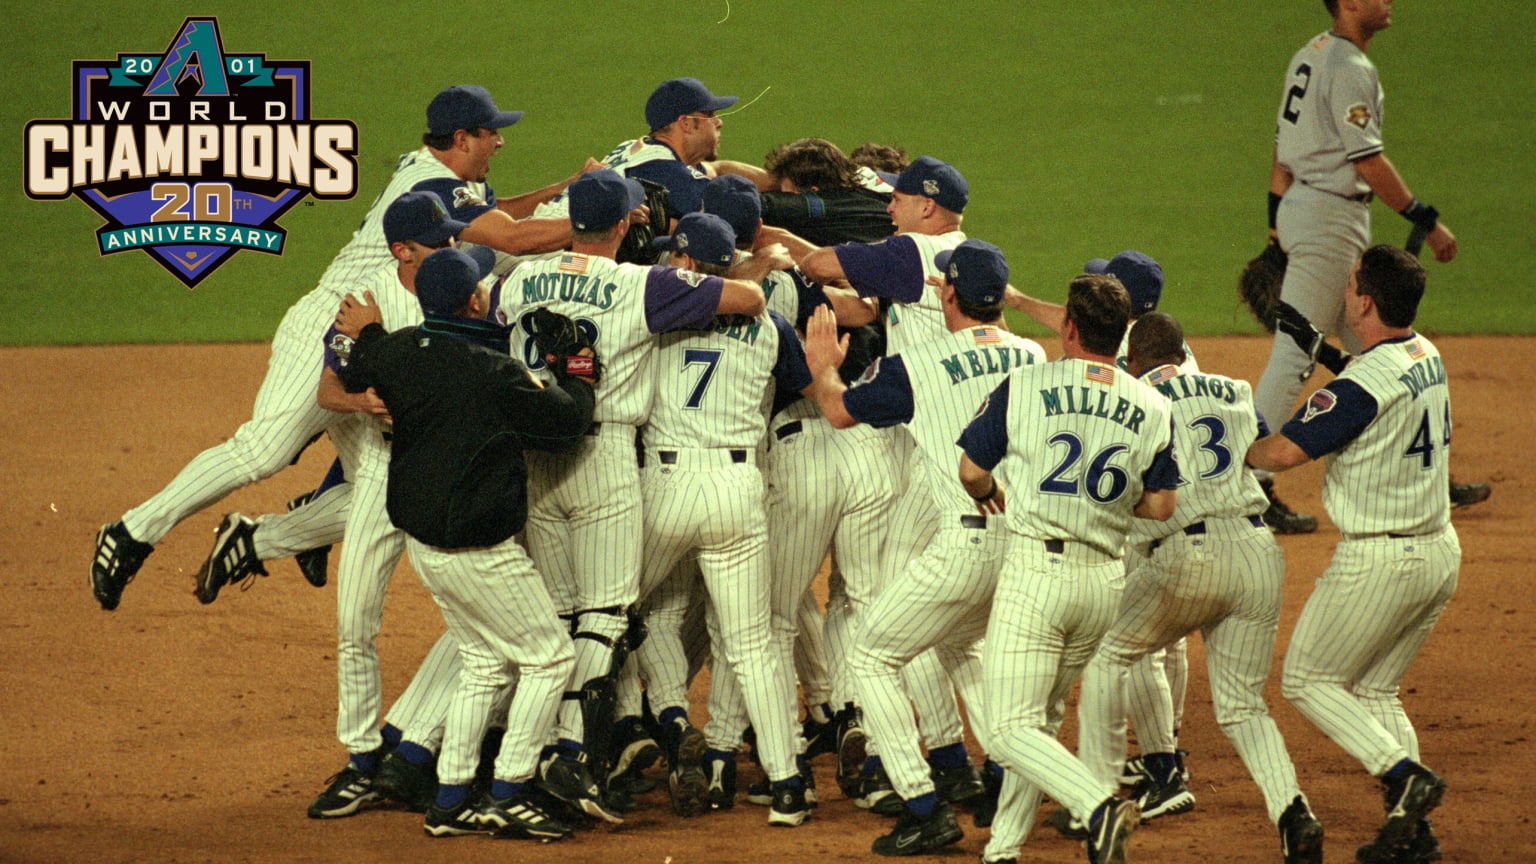 2001 world series champions